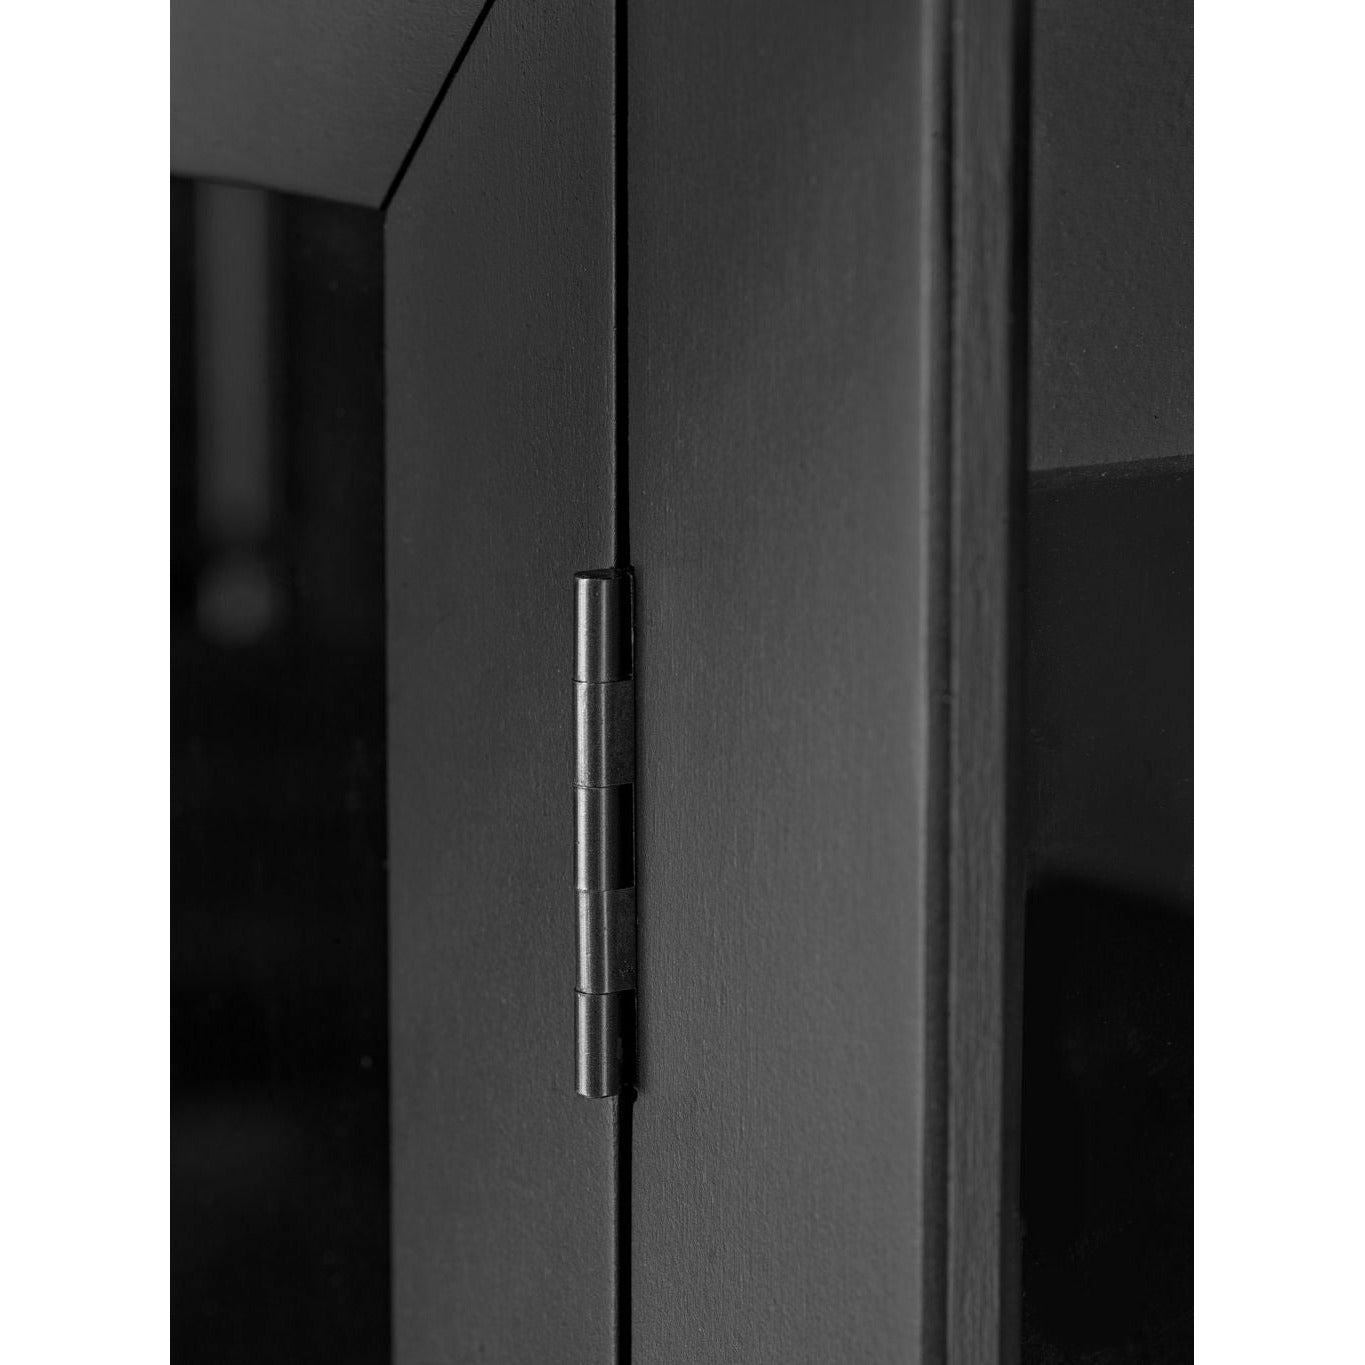 FDB MØBLER A90 Bodne Display Cabinet Beech Black Lacquered, H: 127 cm